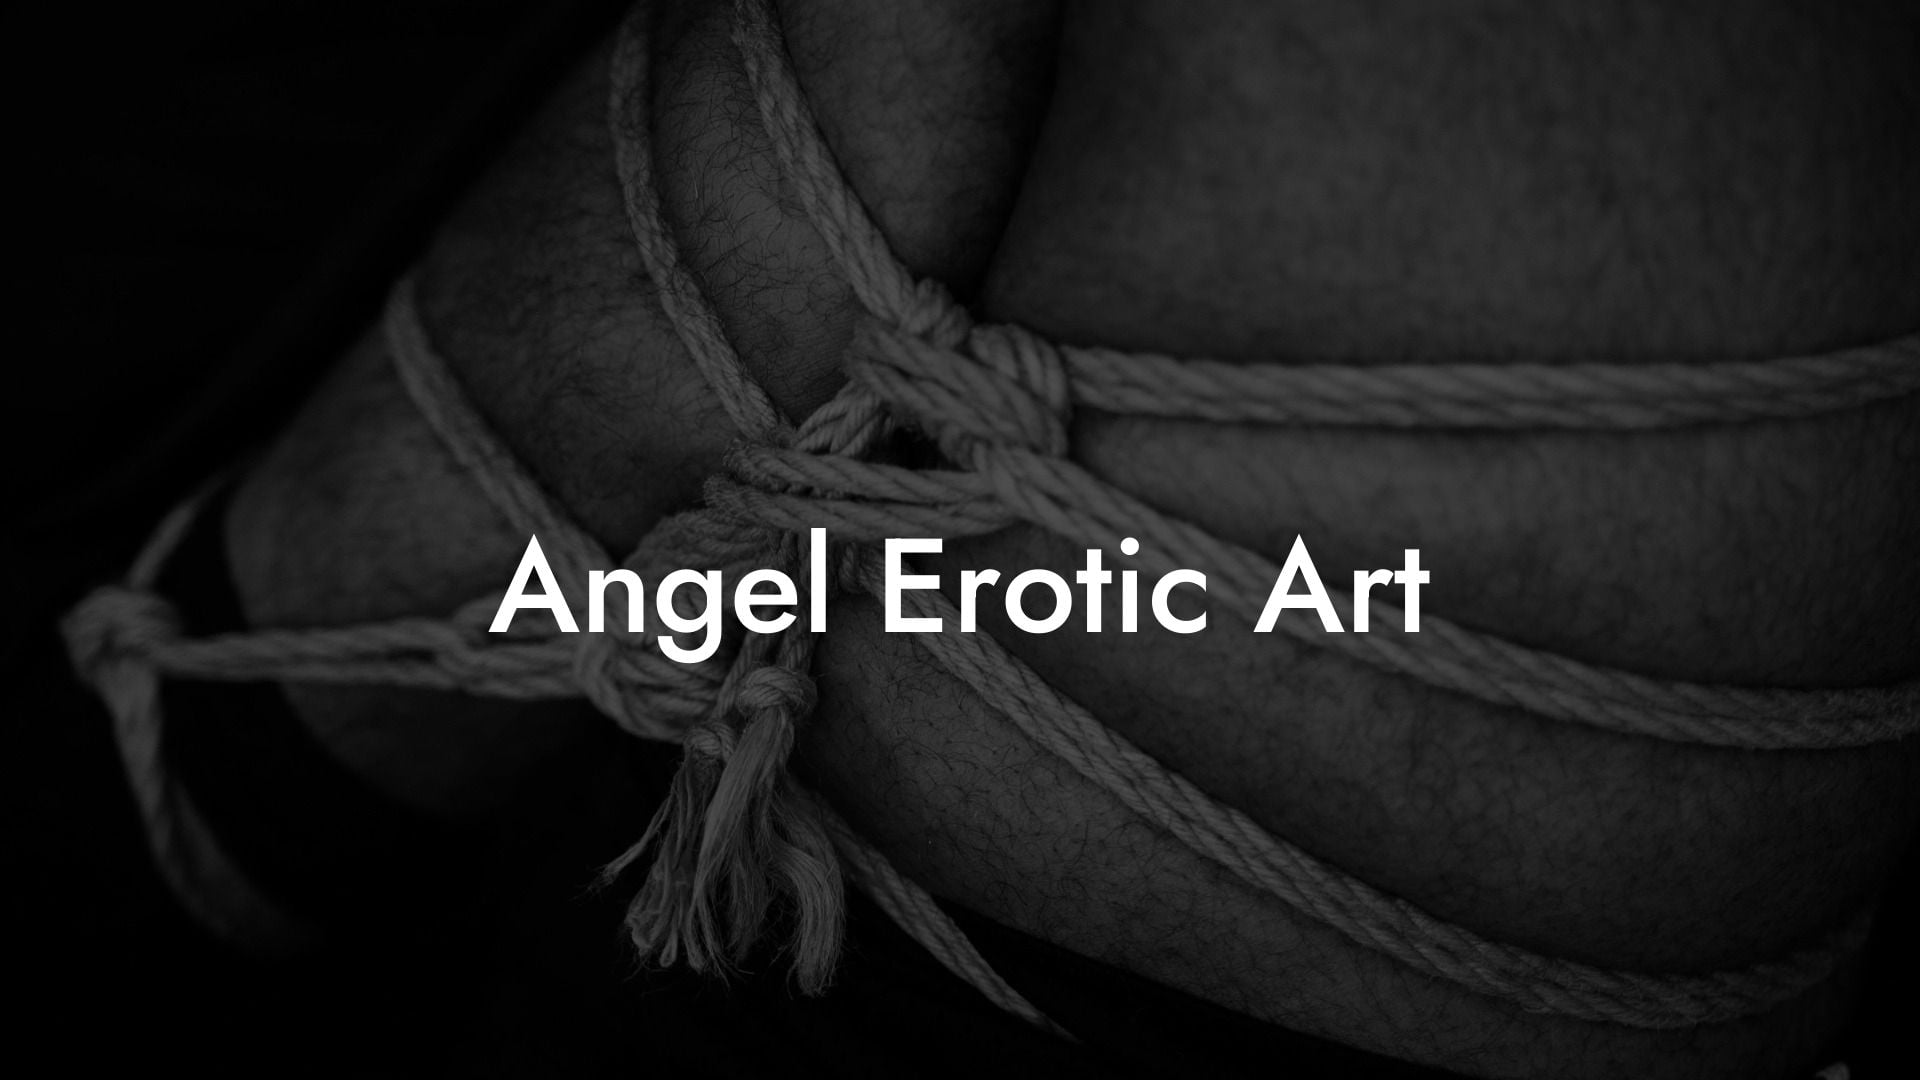 Angel Erotic Art